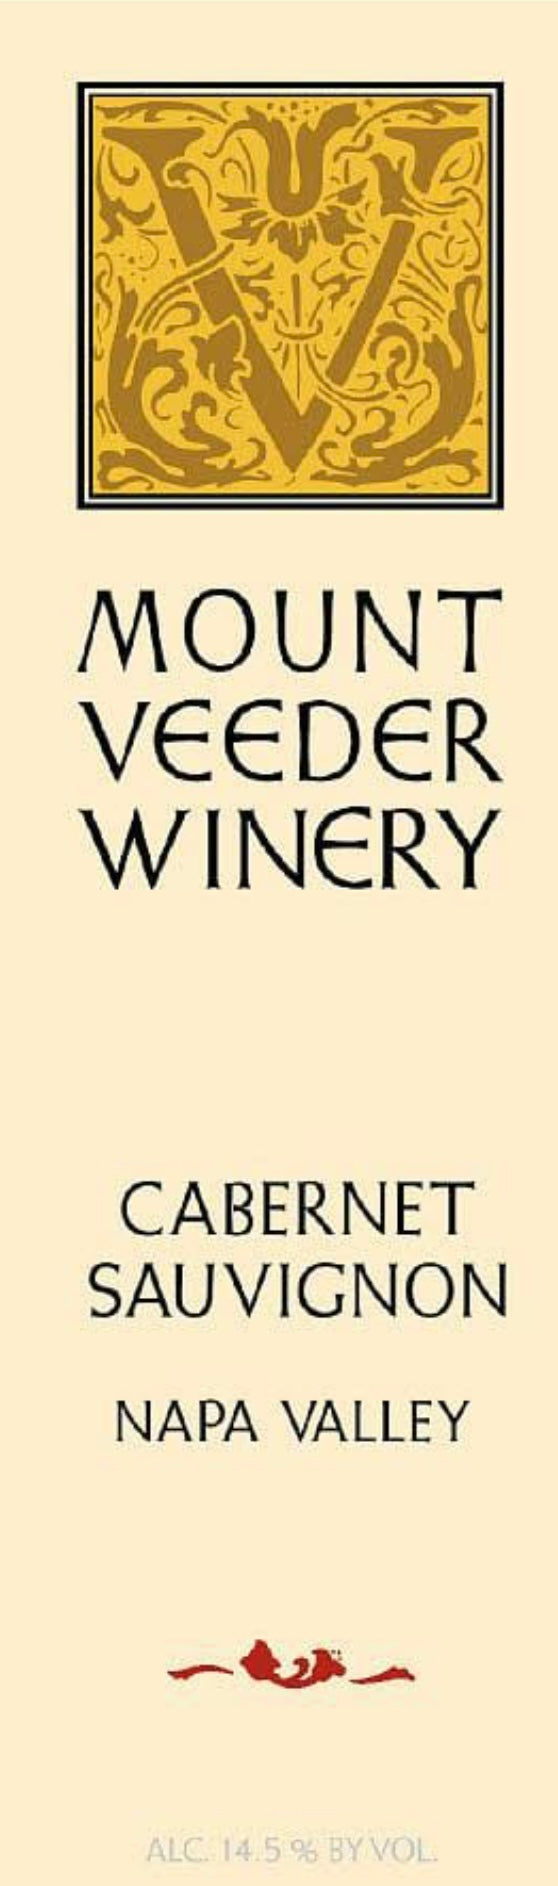 2019 Mount Veeder Winery Cabernet Sauvignon